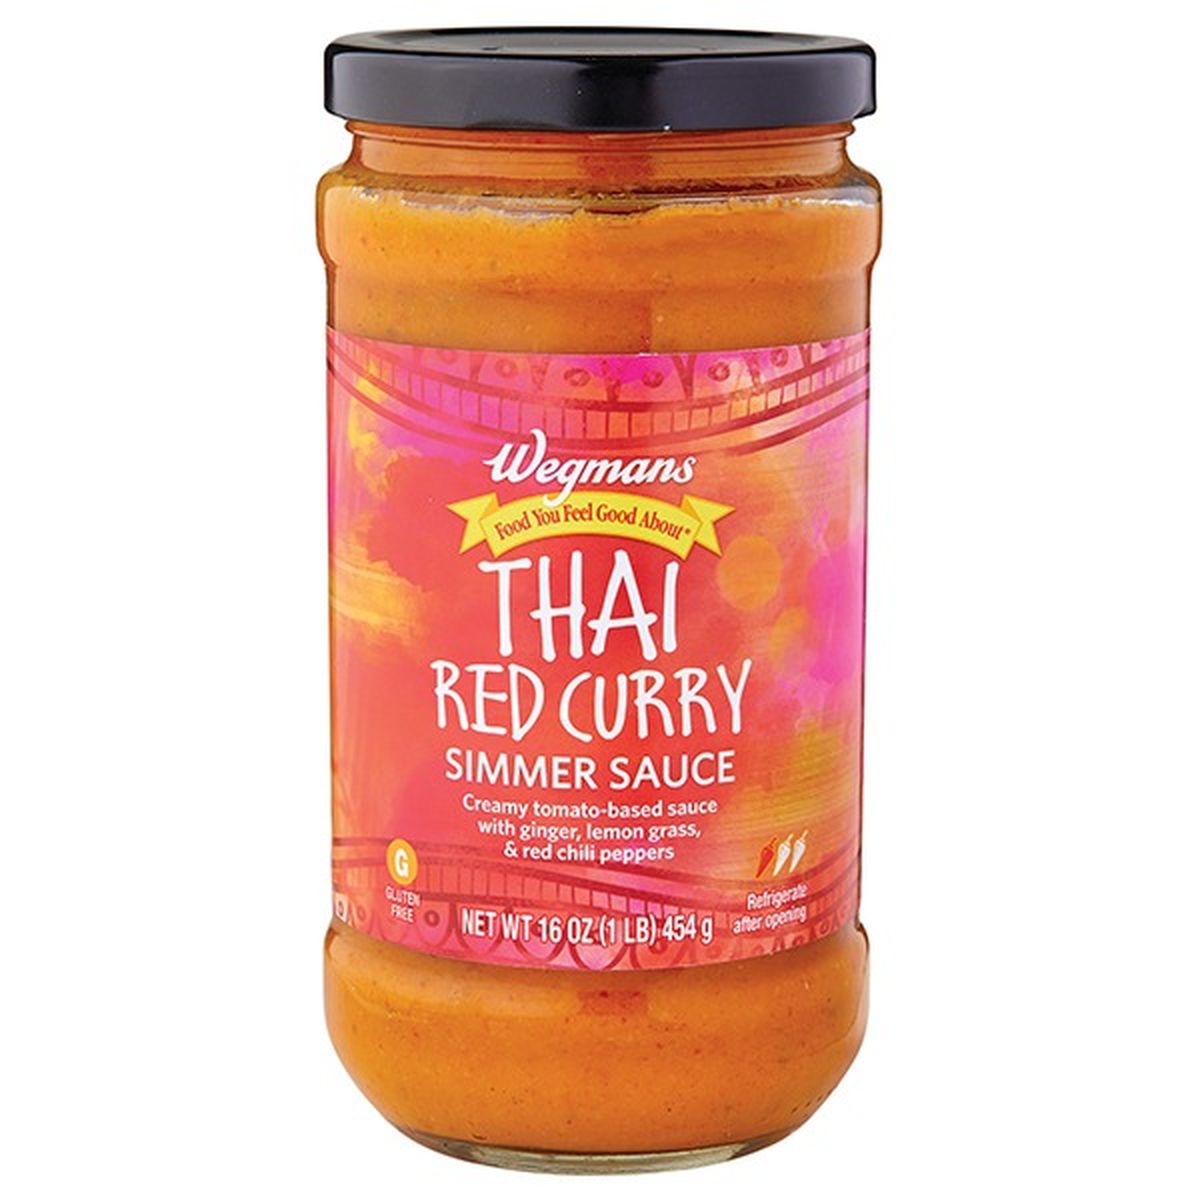 Calories in Wegmans Thai Red Curry Simmer Sauce